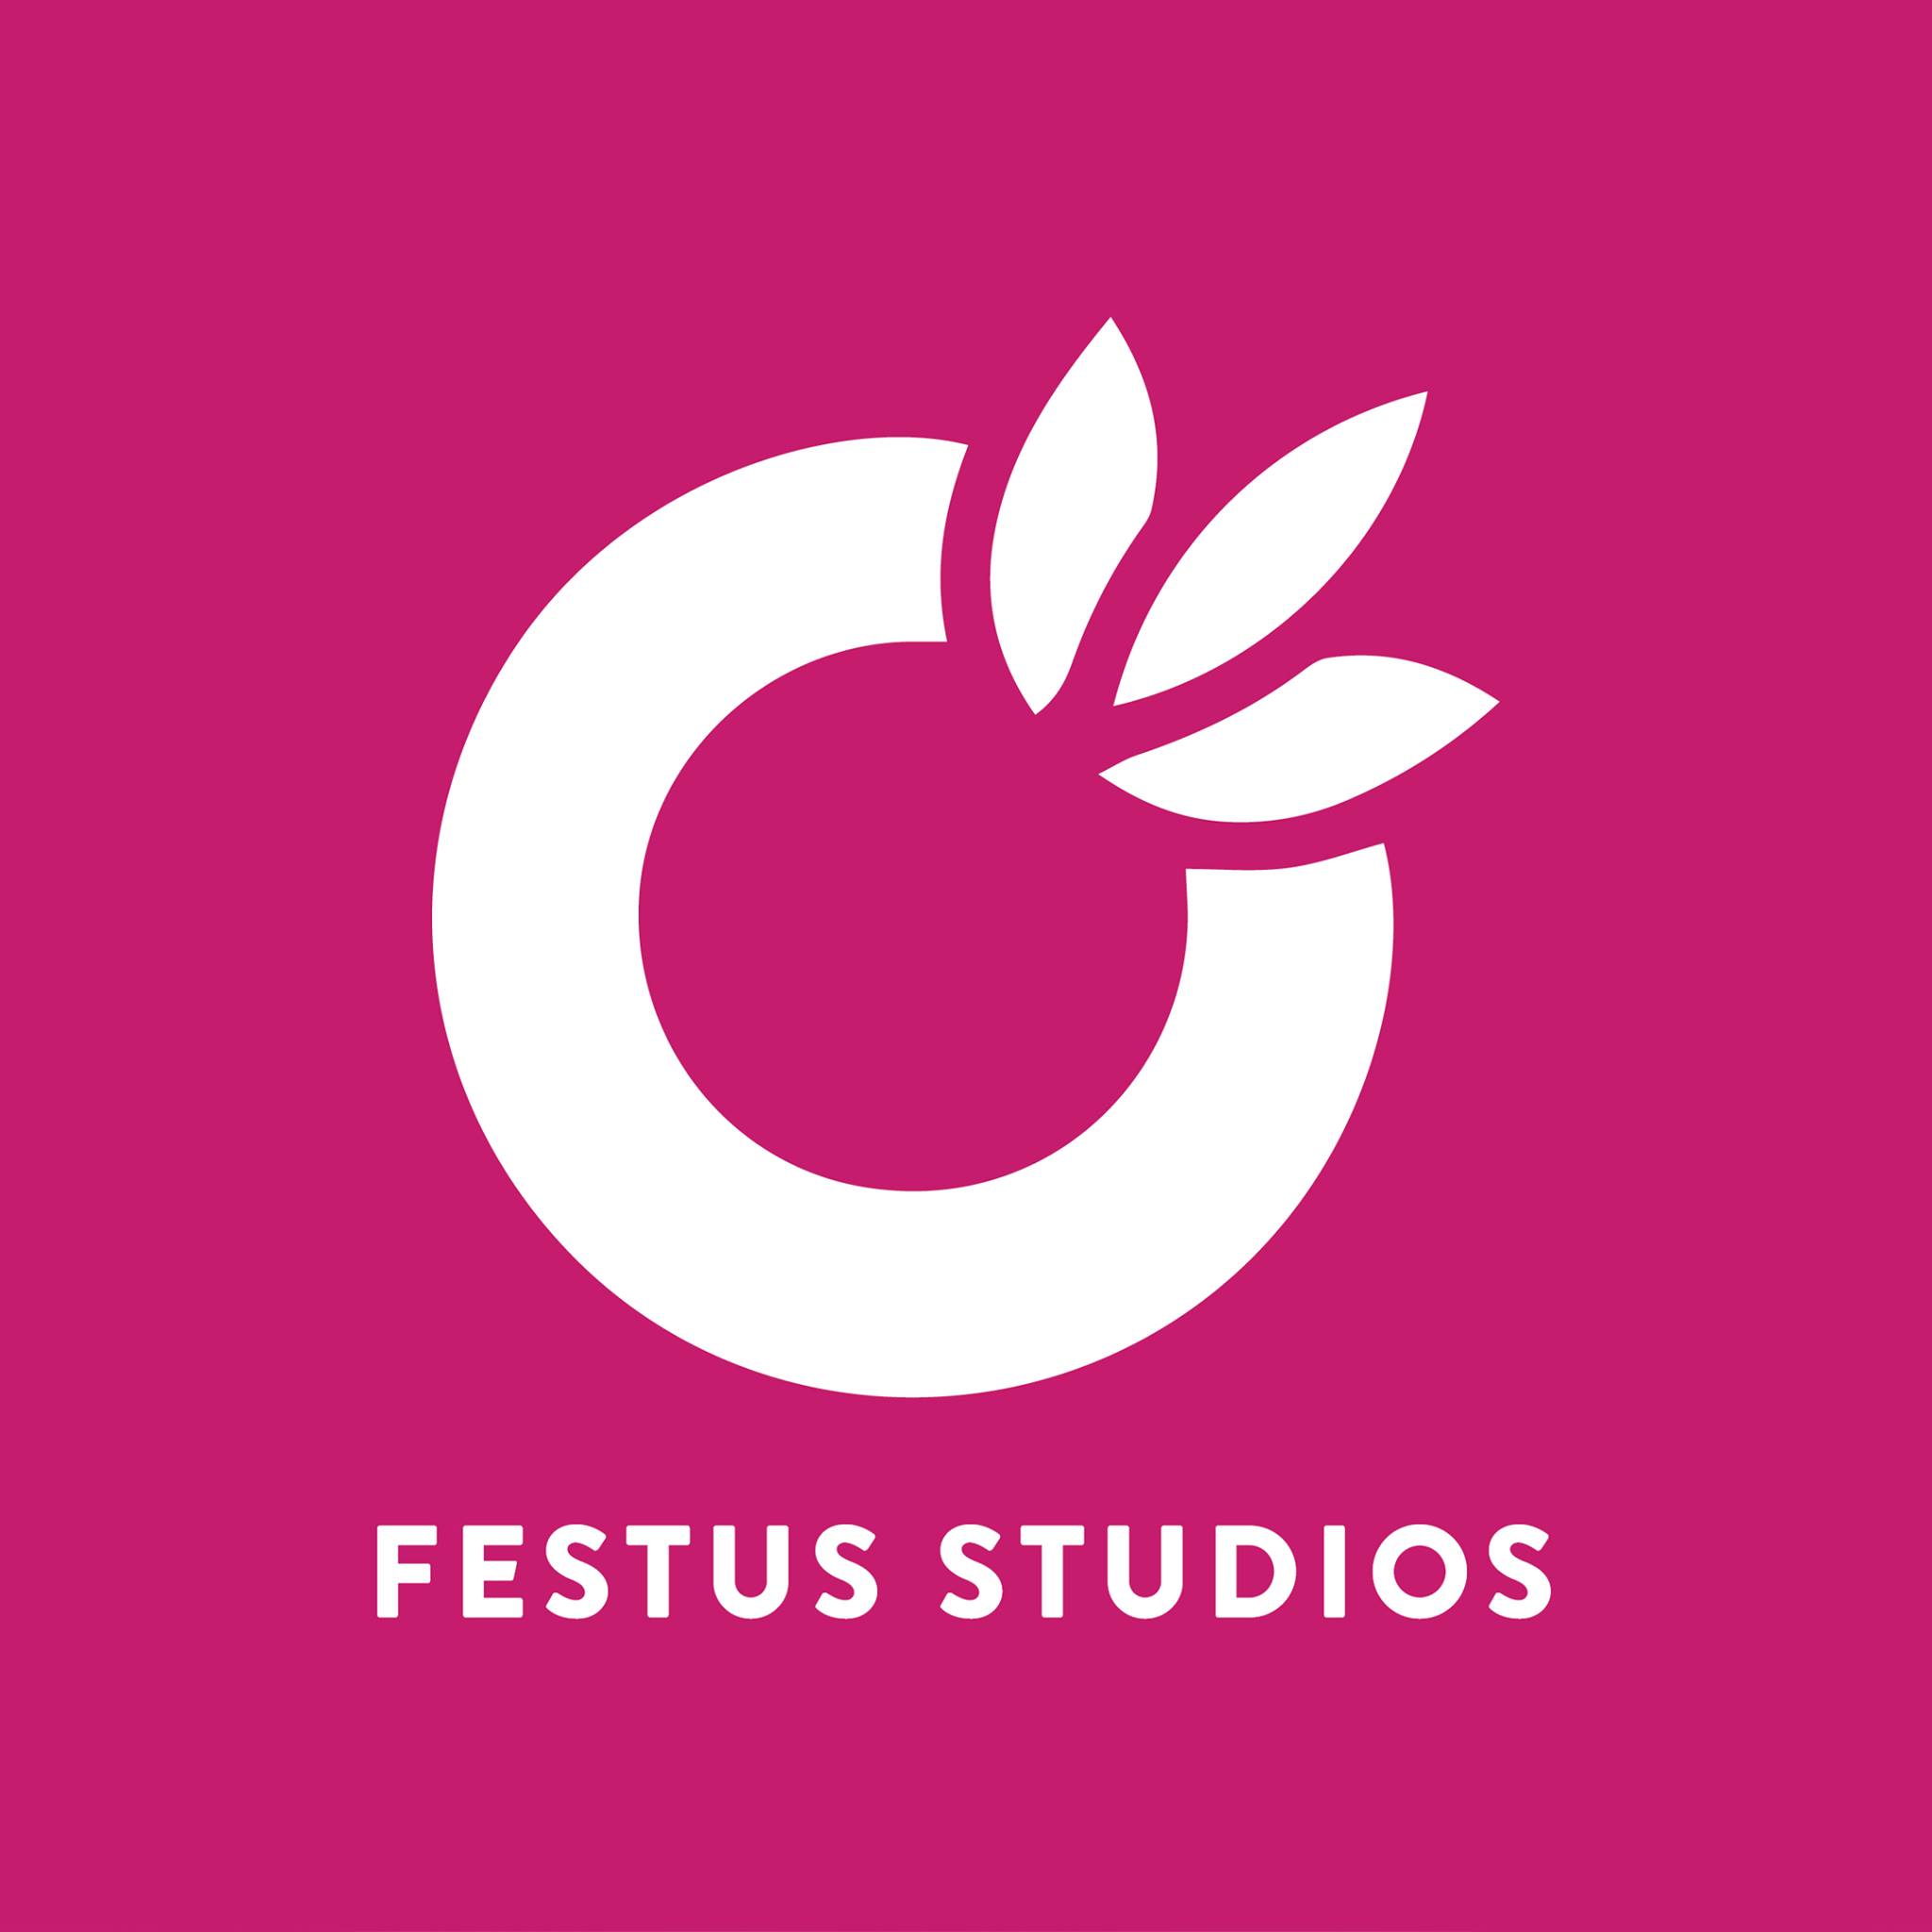 Festus Studios|Banquet Halls|Event Services